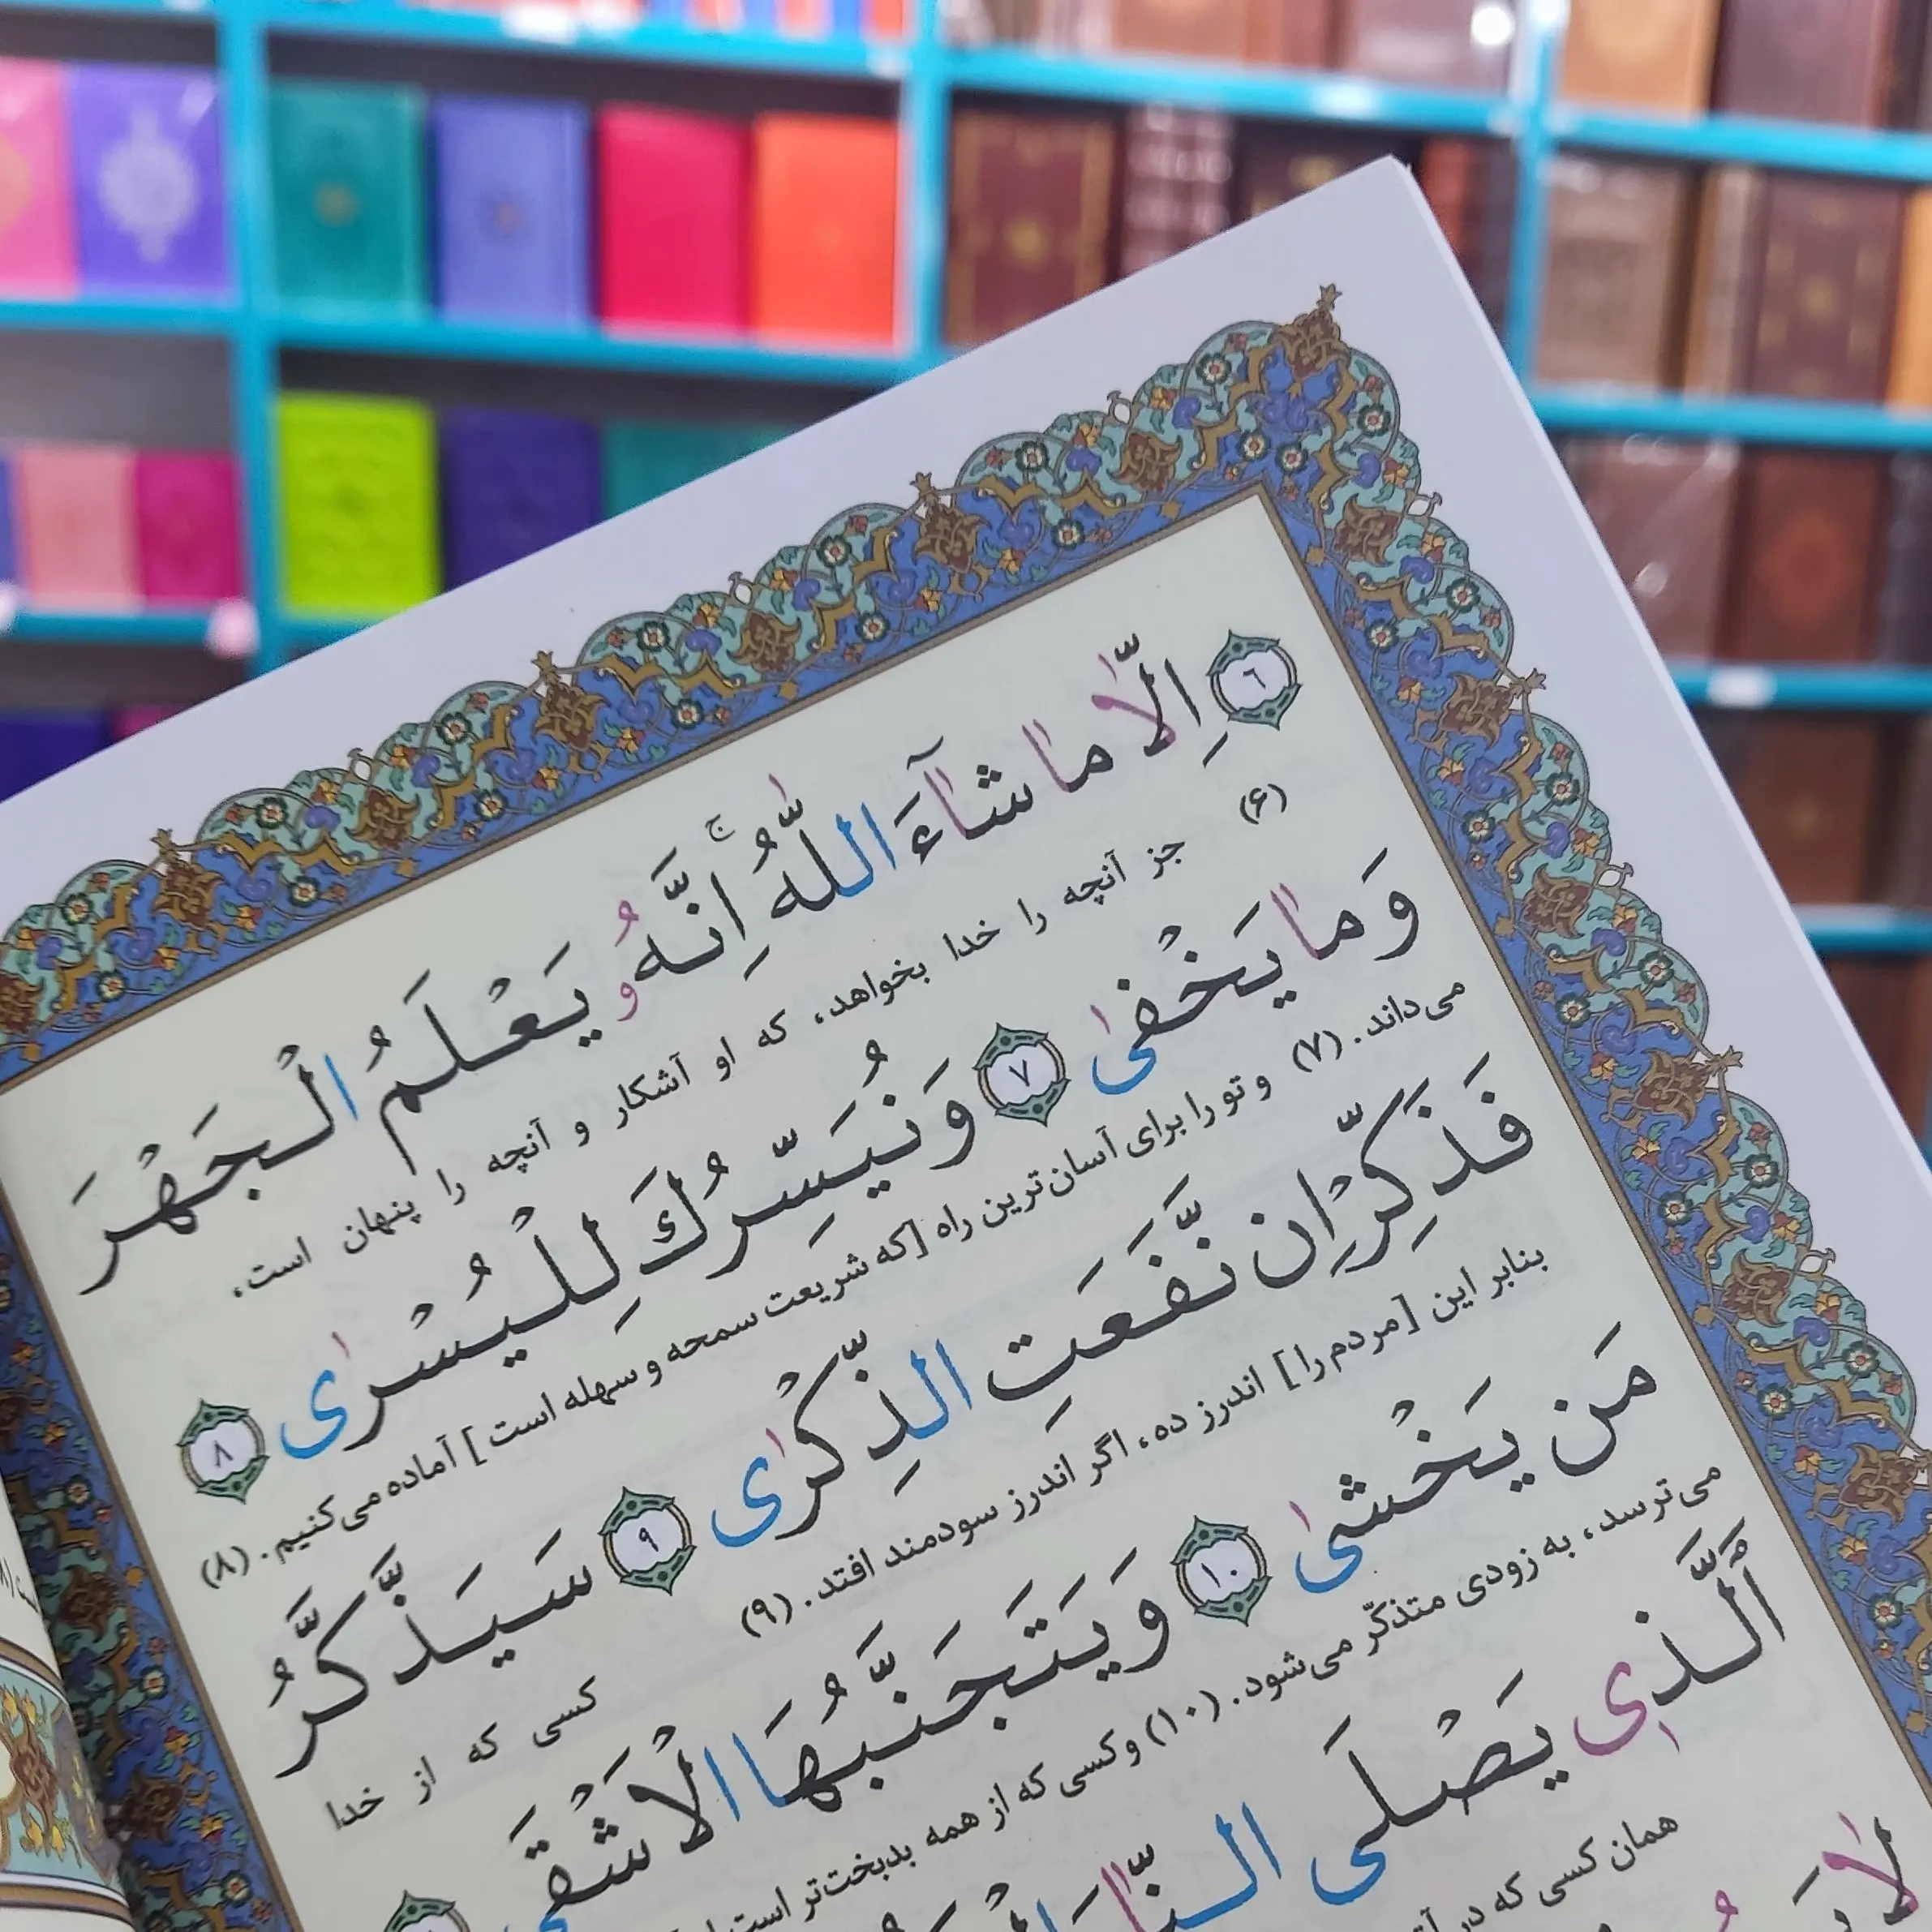 قرآن جز سی خط کامپیوتری همراه با حروف خوانا